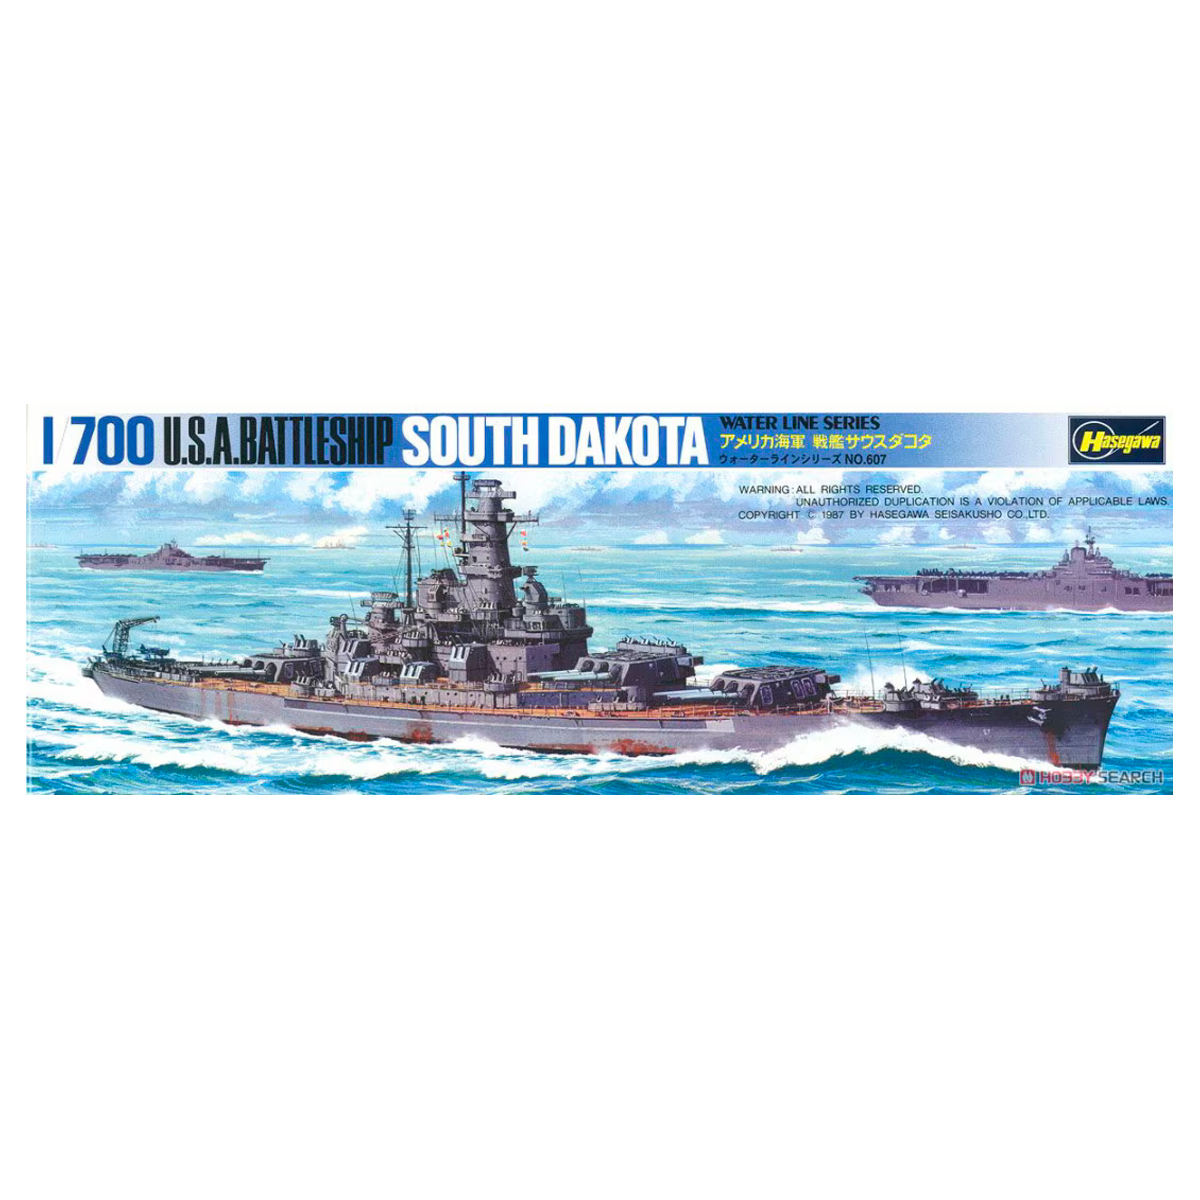 WL607 1/700 U.S. BATTLE SHIP SOUTH DAKOTA